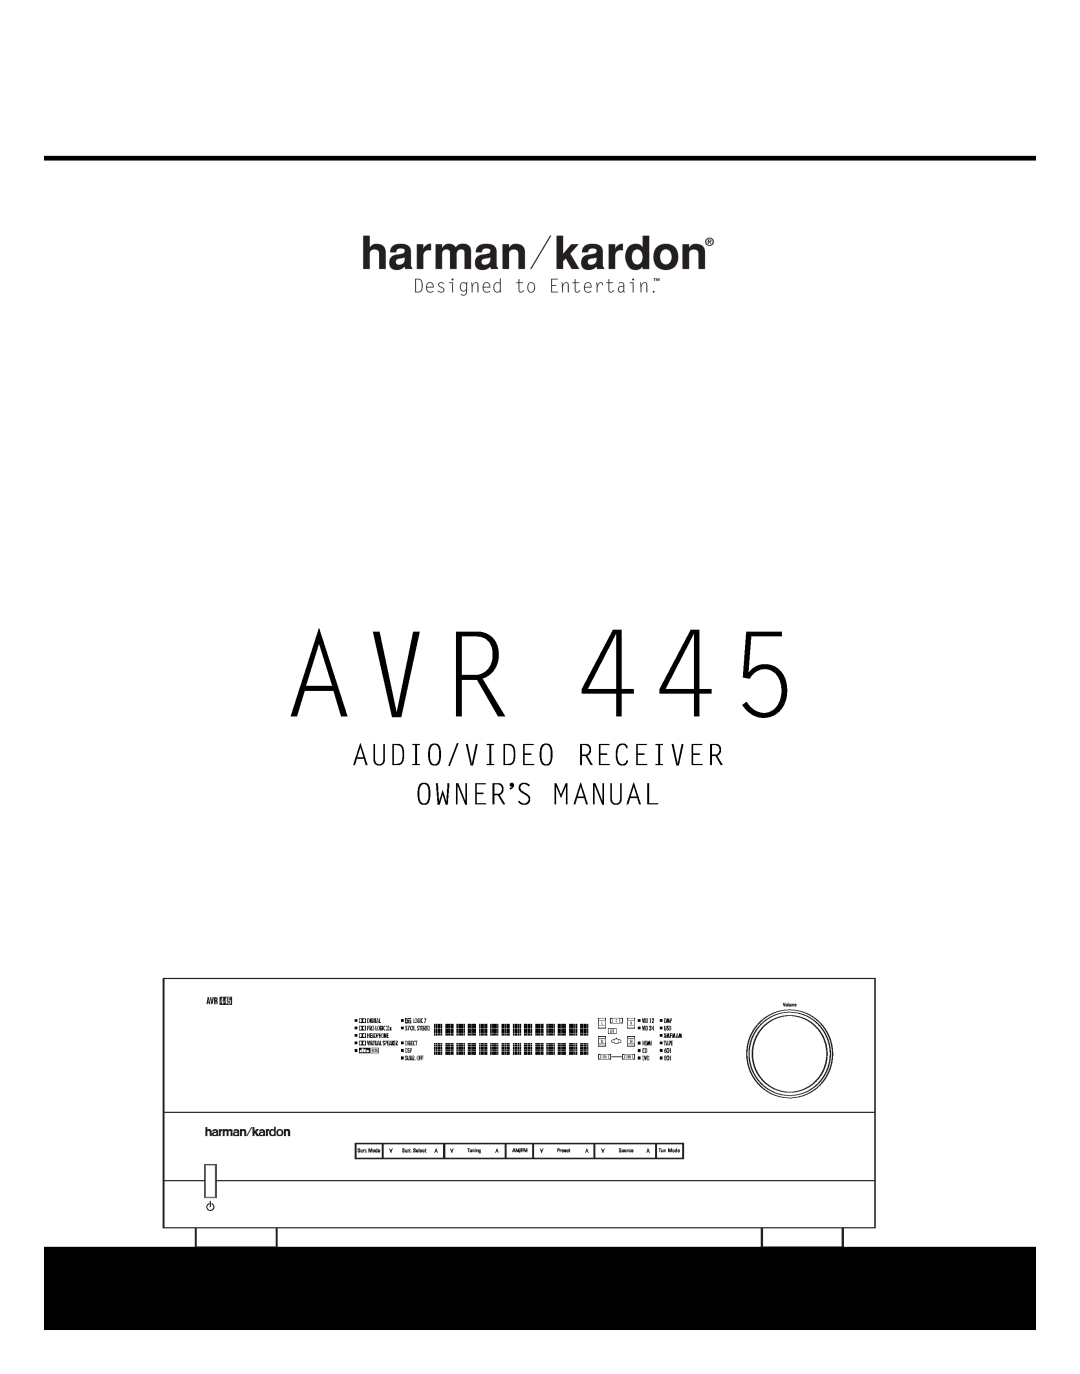 Harman-Kardon AVR 445 owner manual Designed to Entertain 